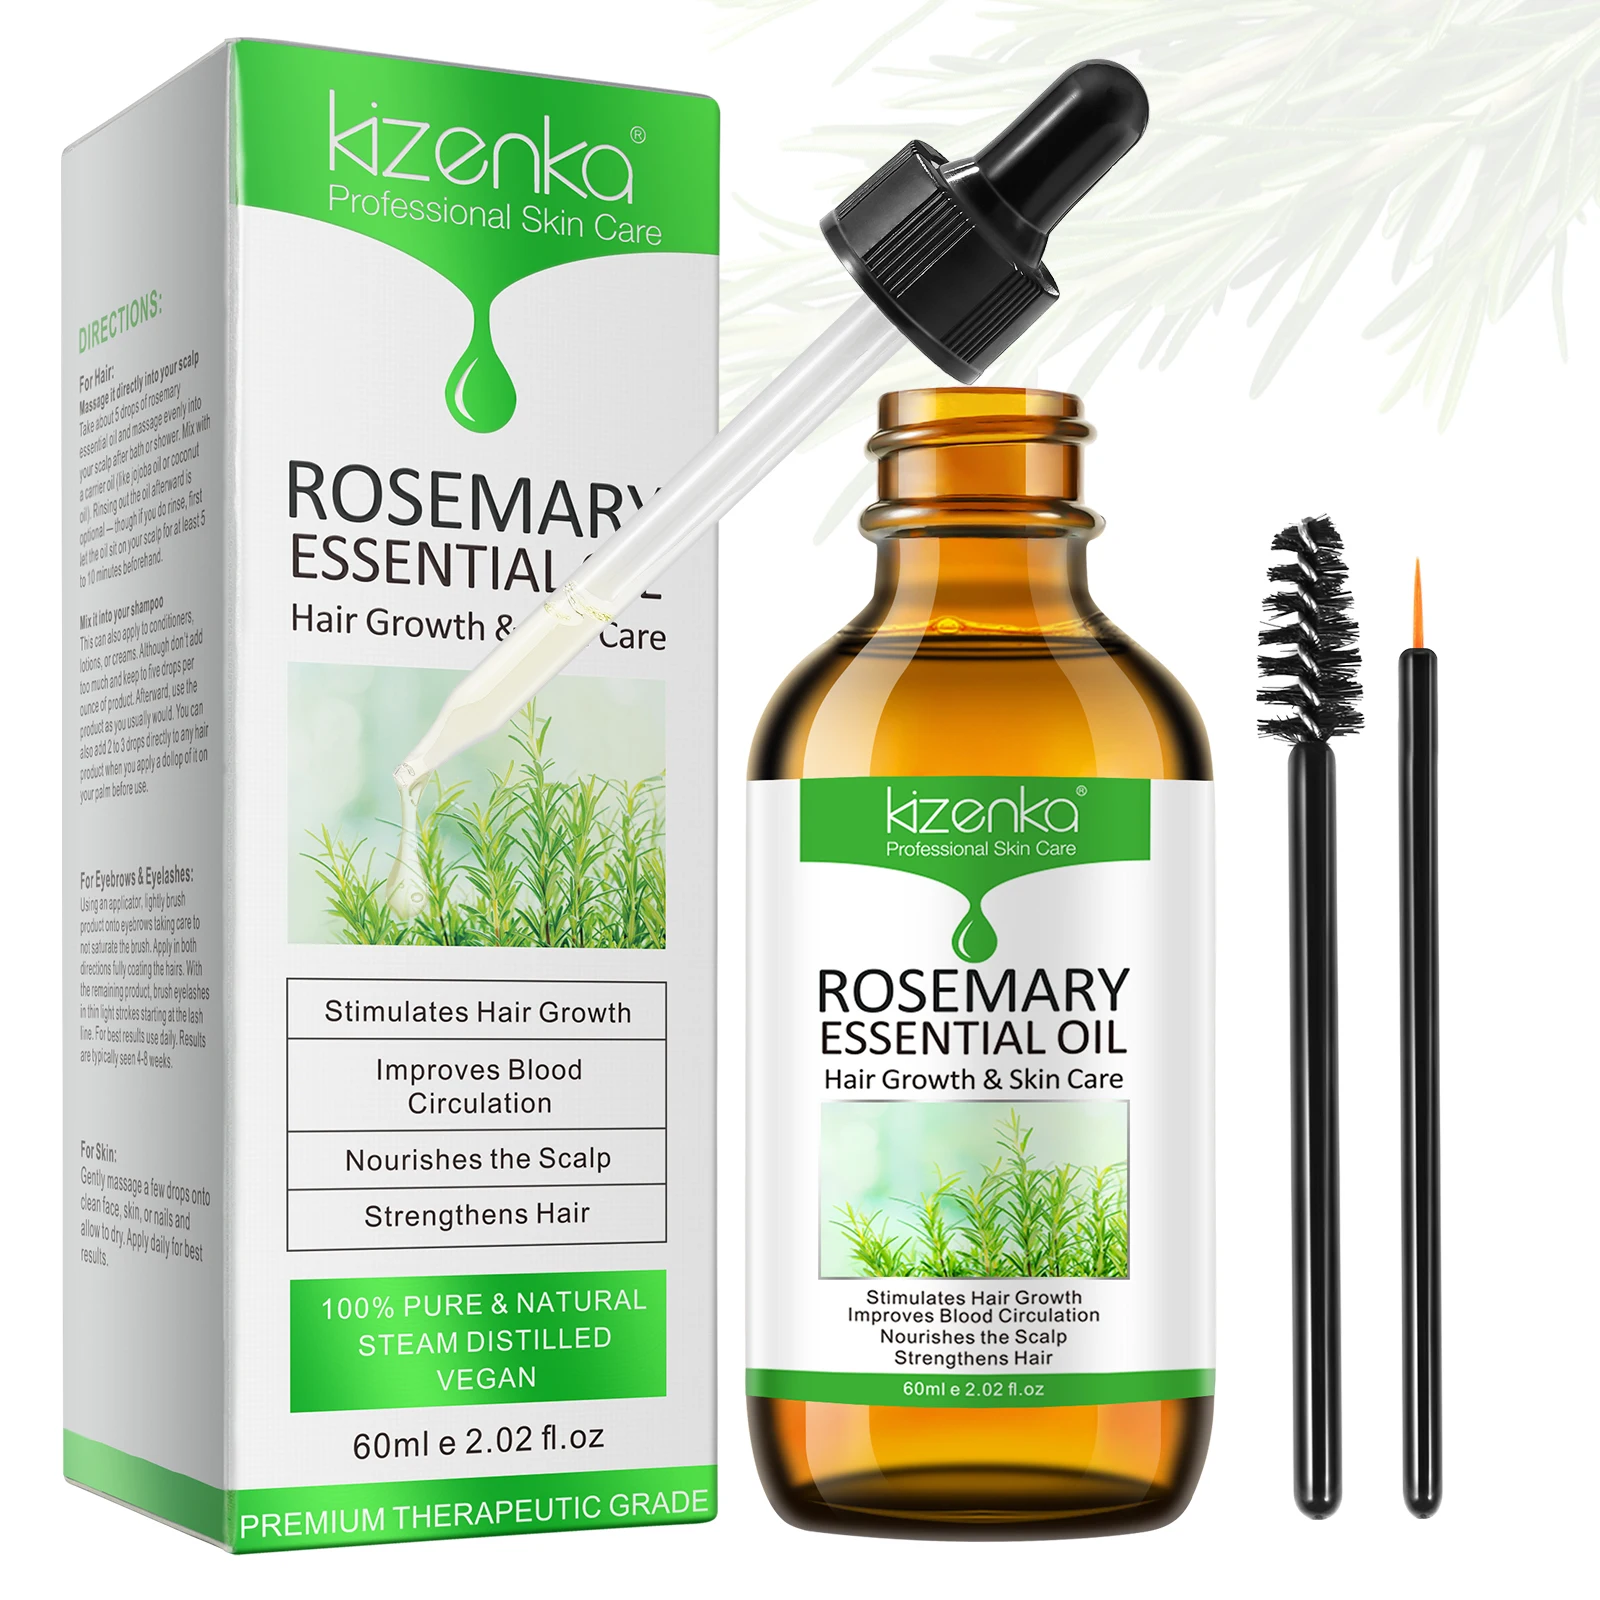 

KIZENKA Pure Natural Steam Distilled Vegan Skin Care Hair Growth Organic Rosemary Essential Oil